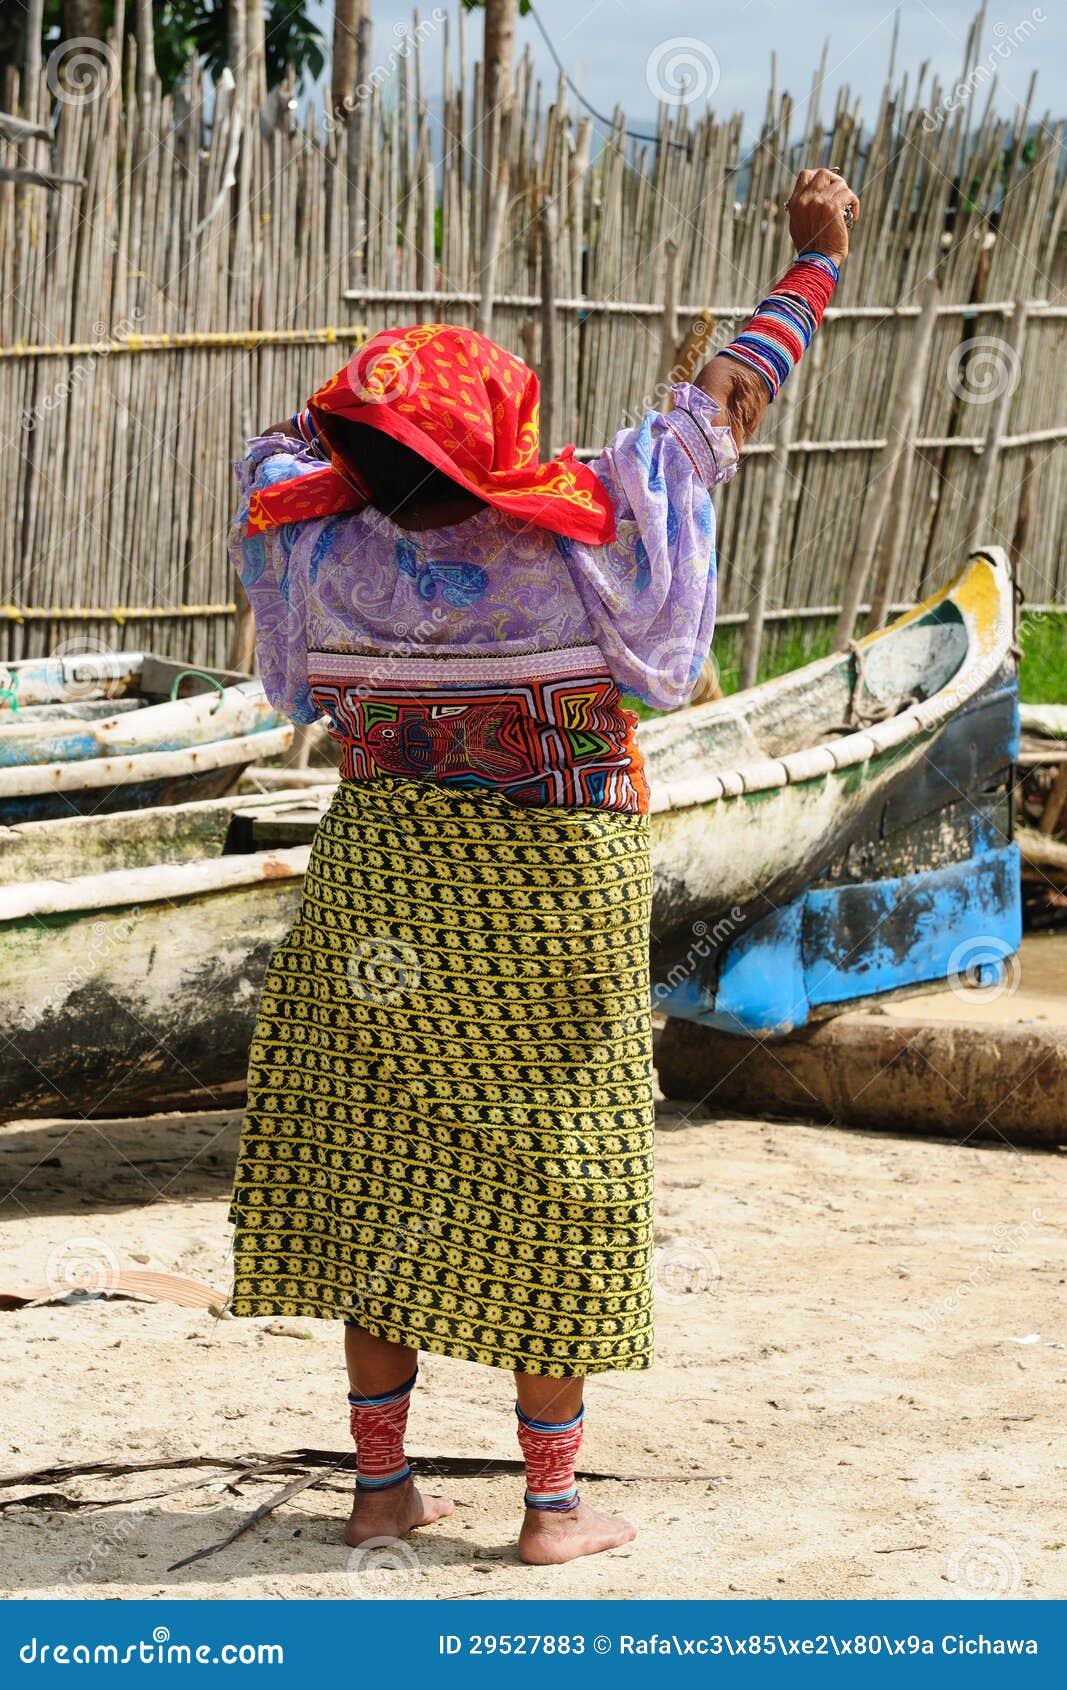 panama, traditional kuna people